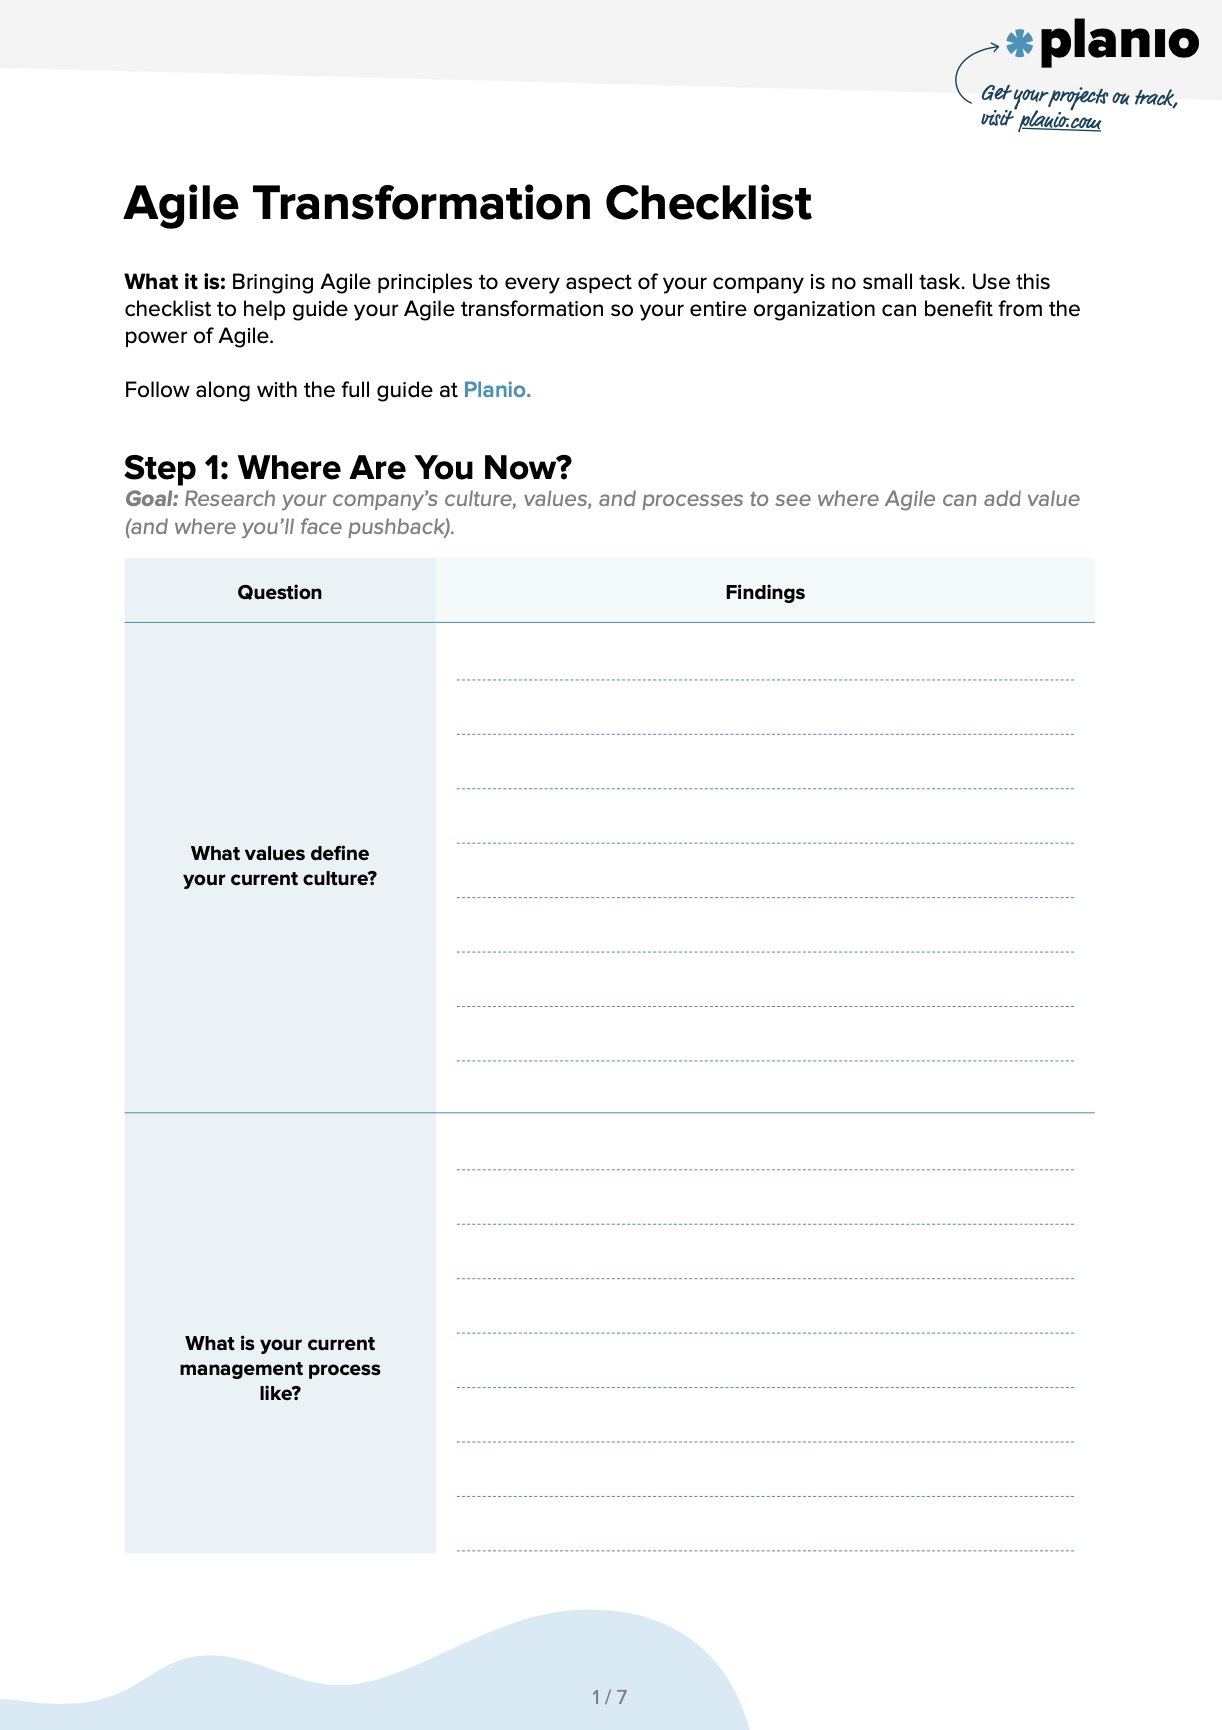 Agile transformation checklist screenshot